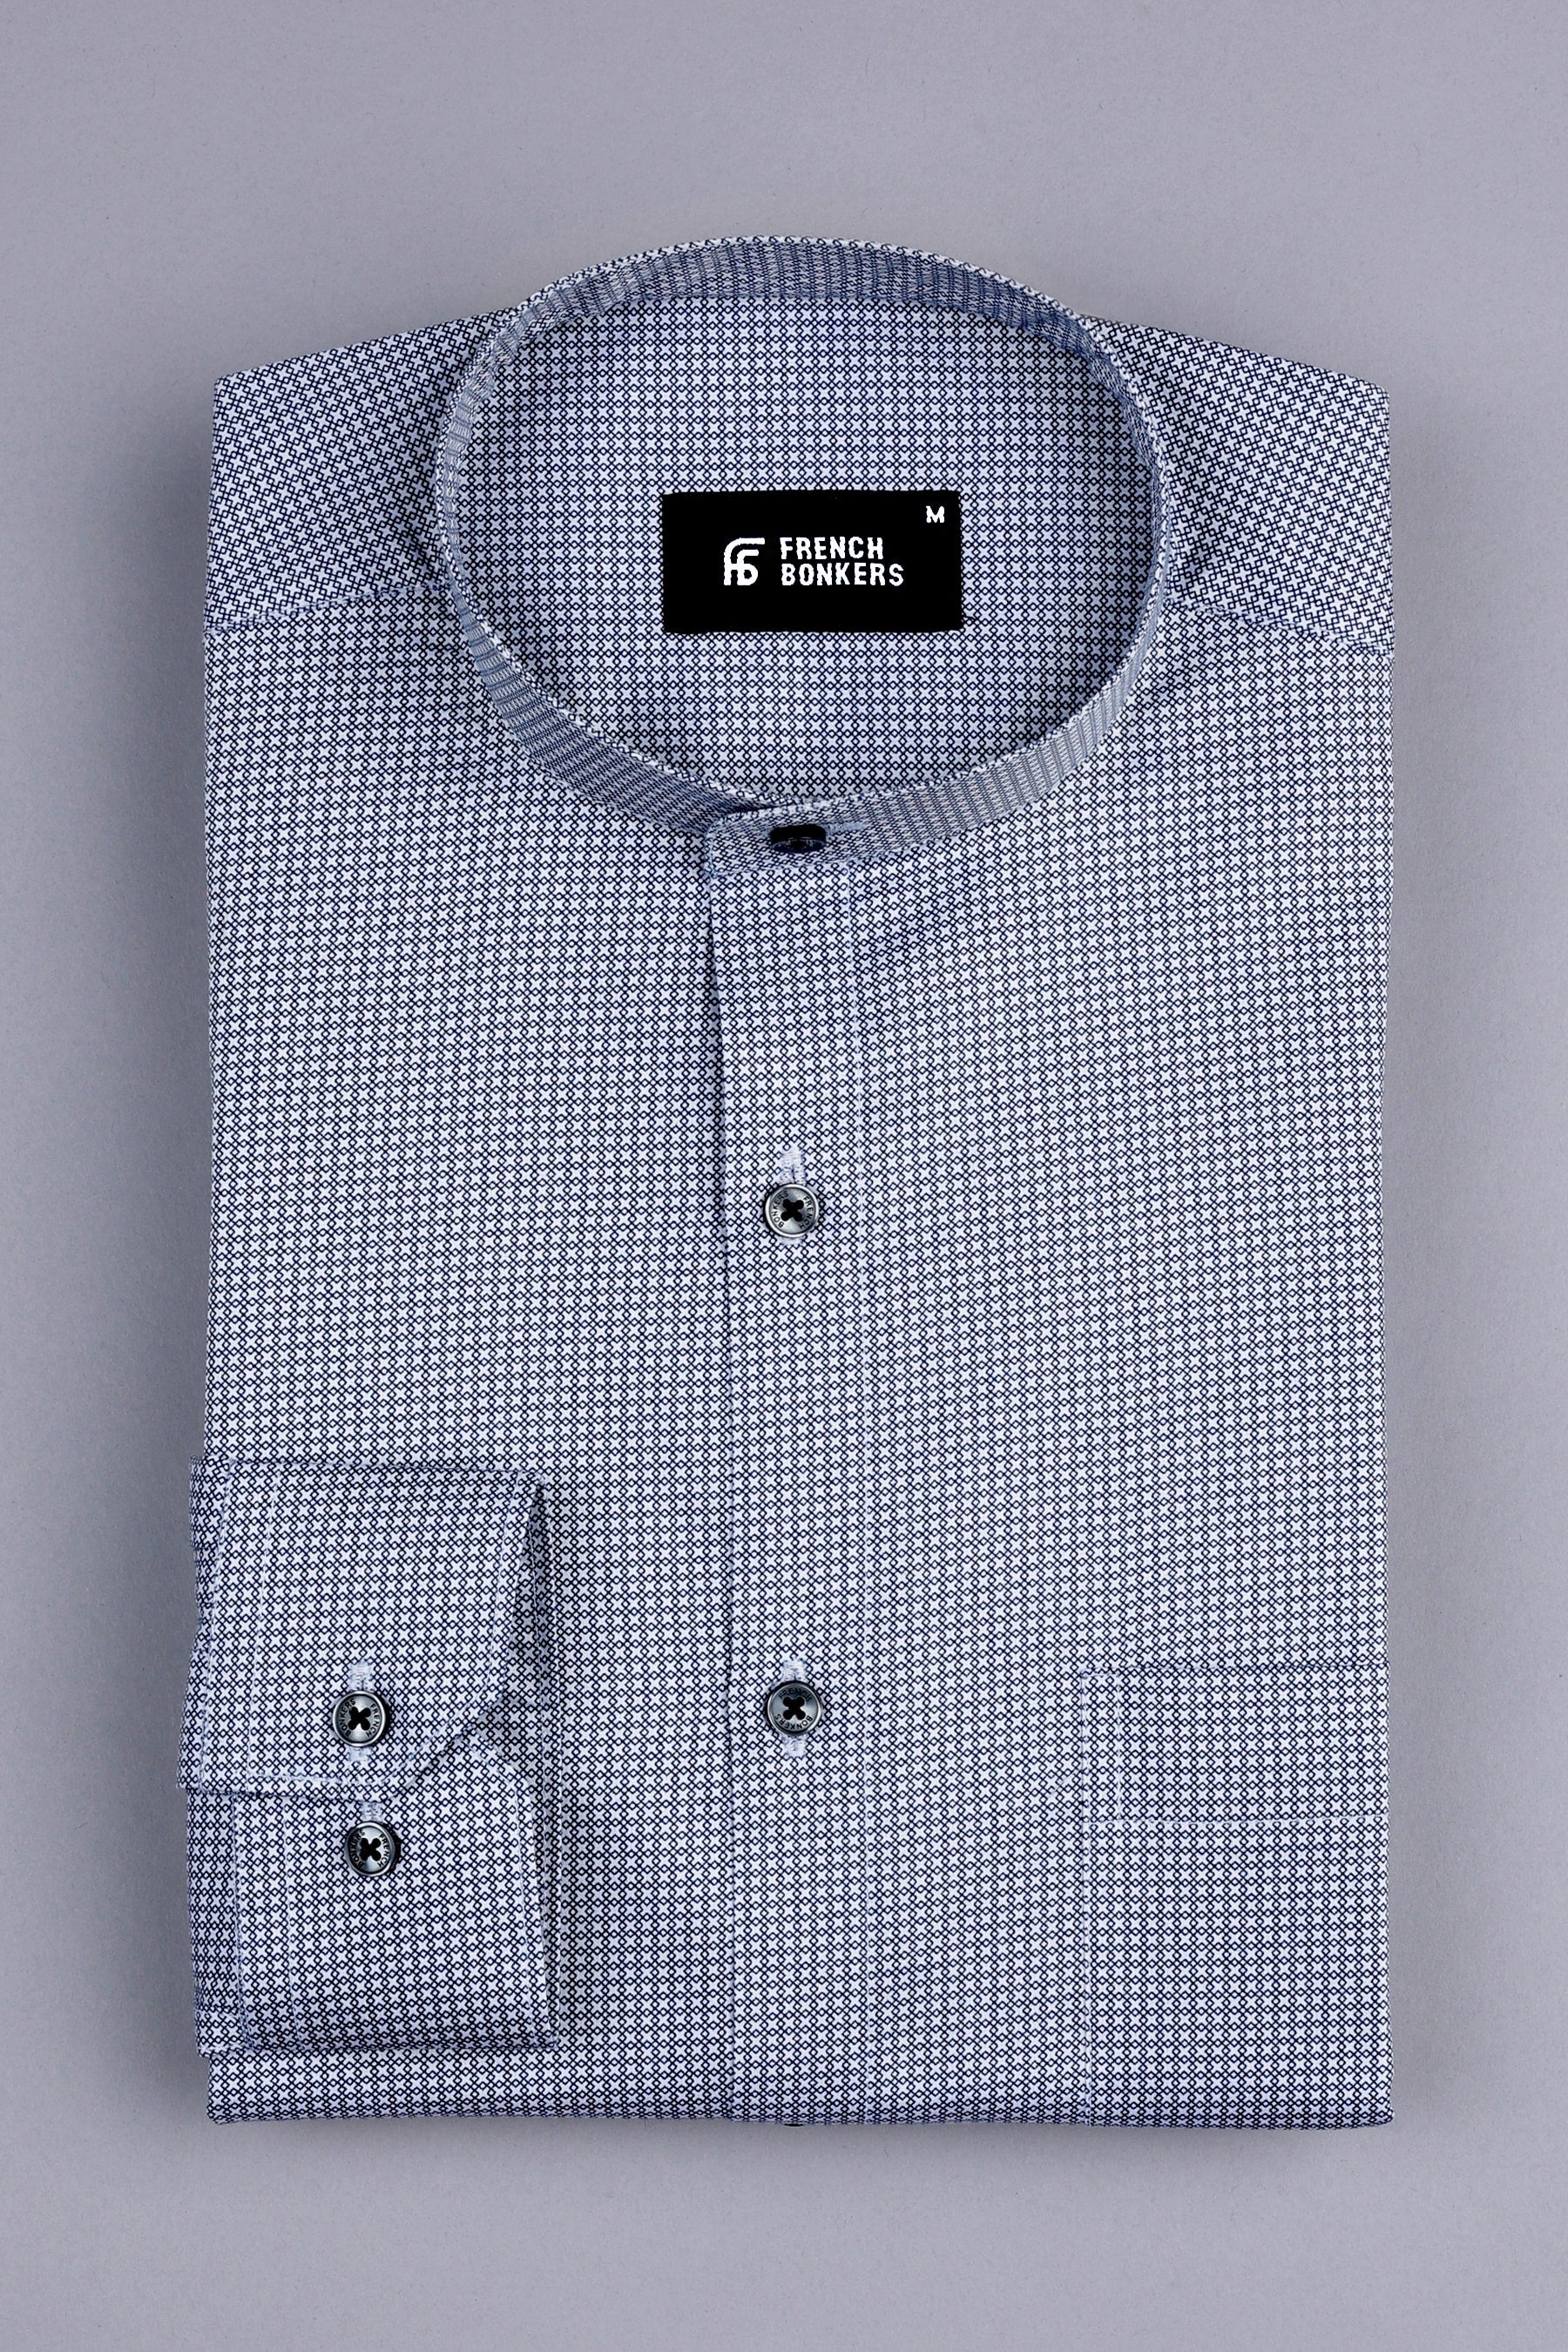 White with navy blue geometrical printed satin shirt